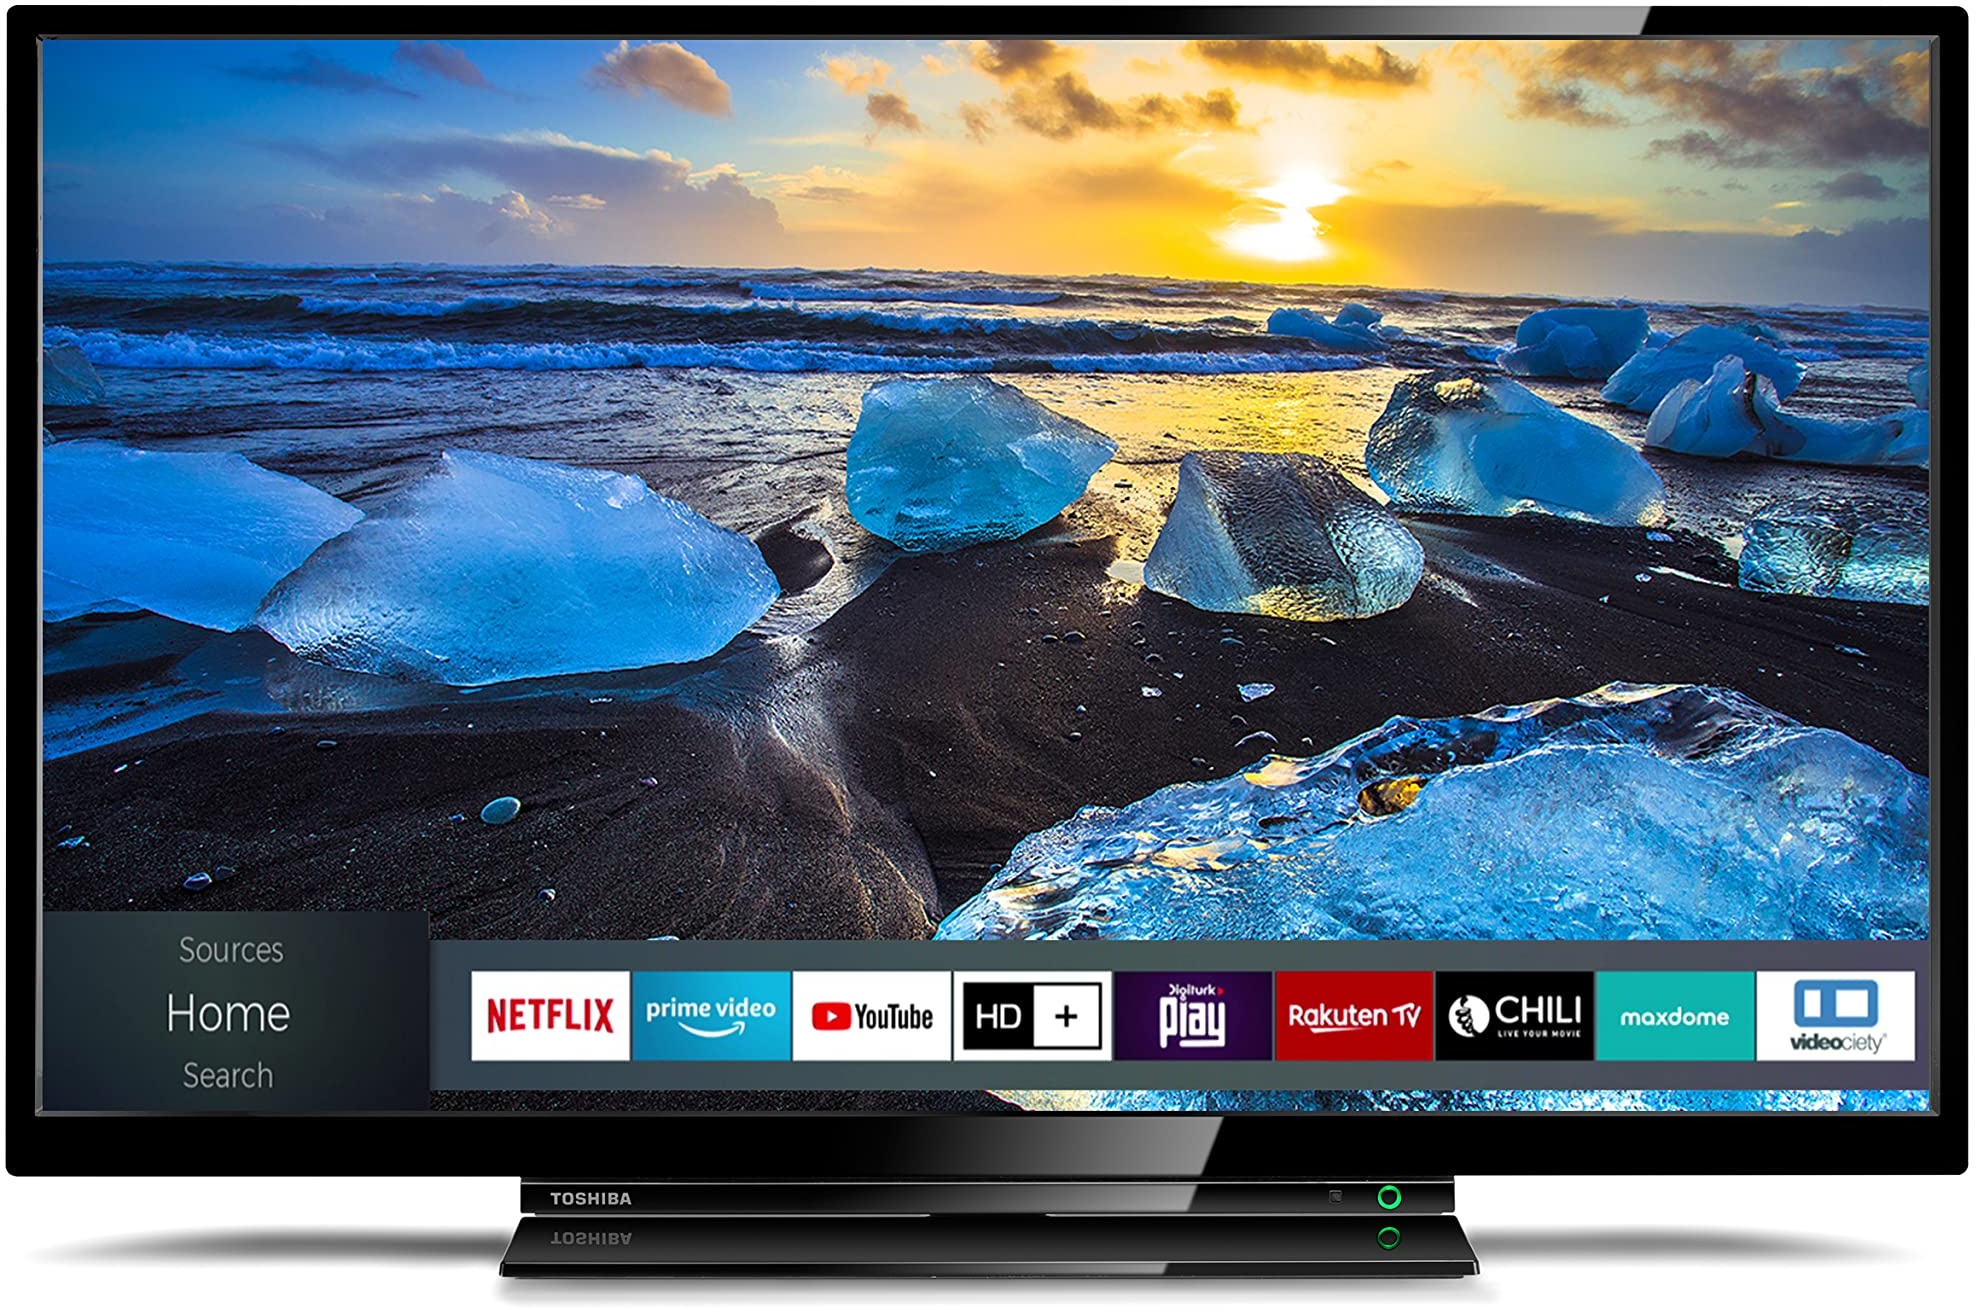 Toshiba 32L3163DAS 32 Zoll Fernseher / Smart TV (Full HD, HDR, Triple-Tuner) - 6 Monate HD+ inklusive, Schwarz